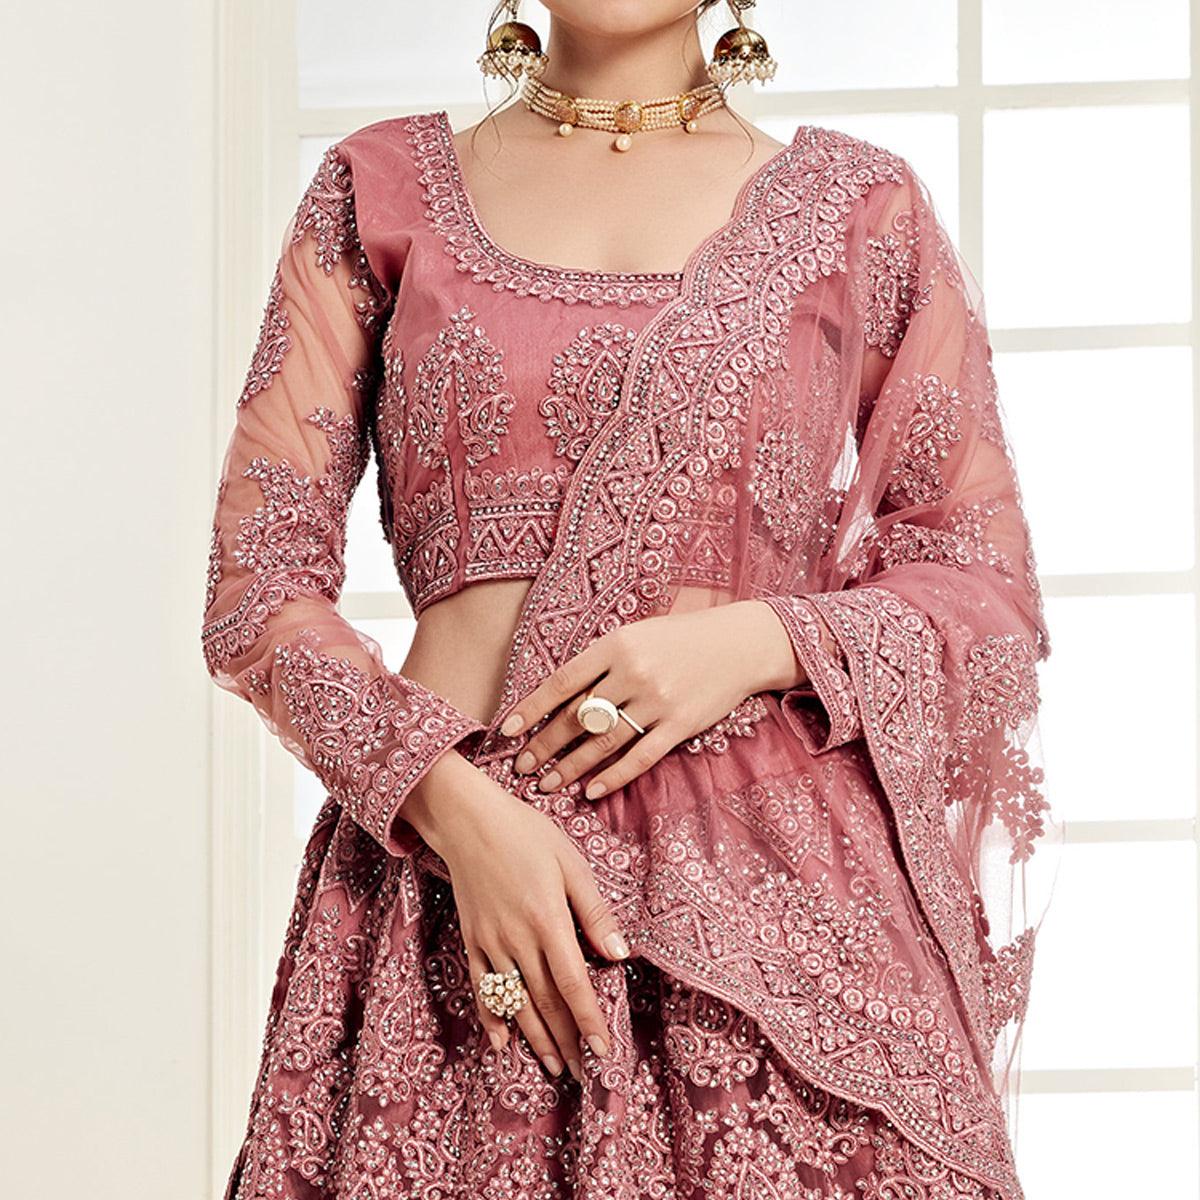 Innovative Rose Pink Colored Cording Embroidery Wedding Wear Net Lehenga Choli - Peachmode